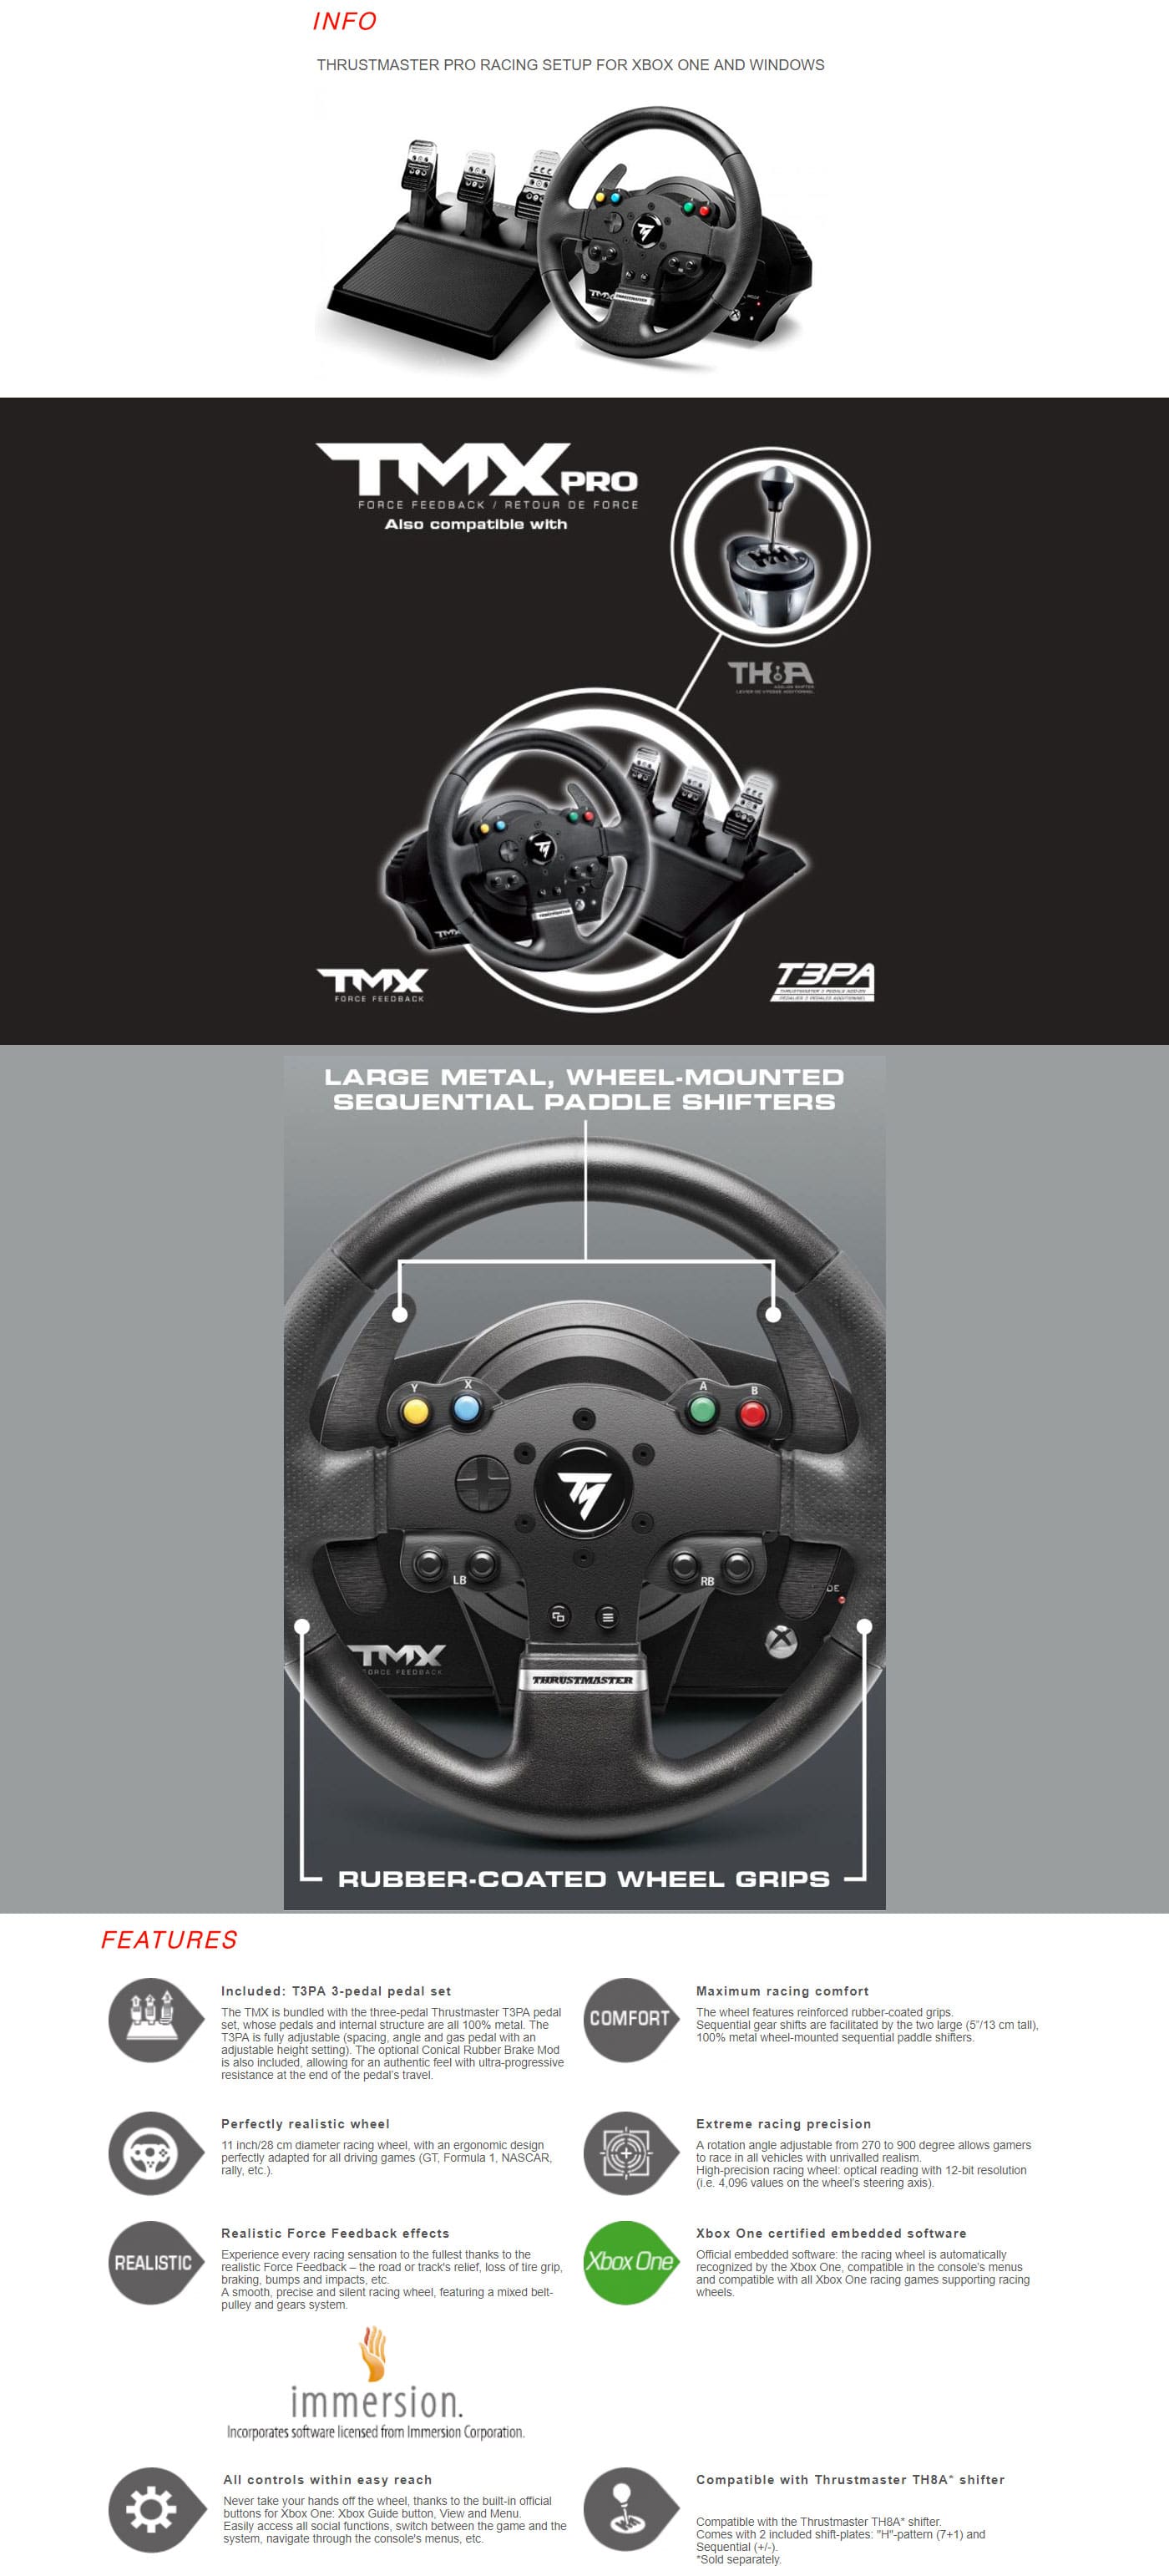 Thrustmaster TMX Pro FFB Racing Wheel features